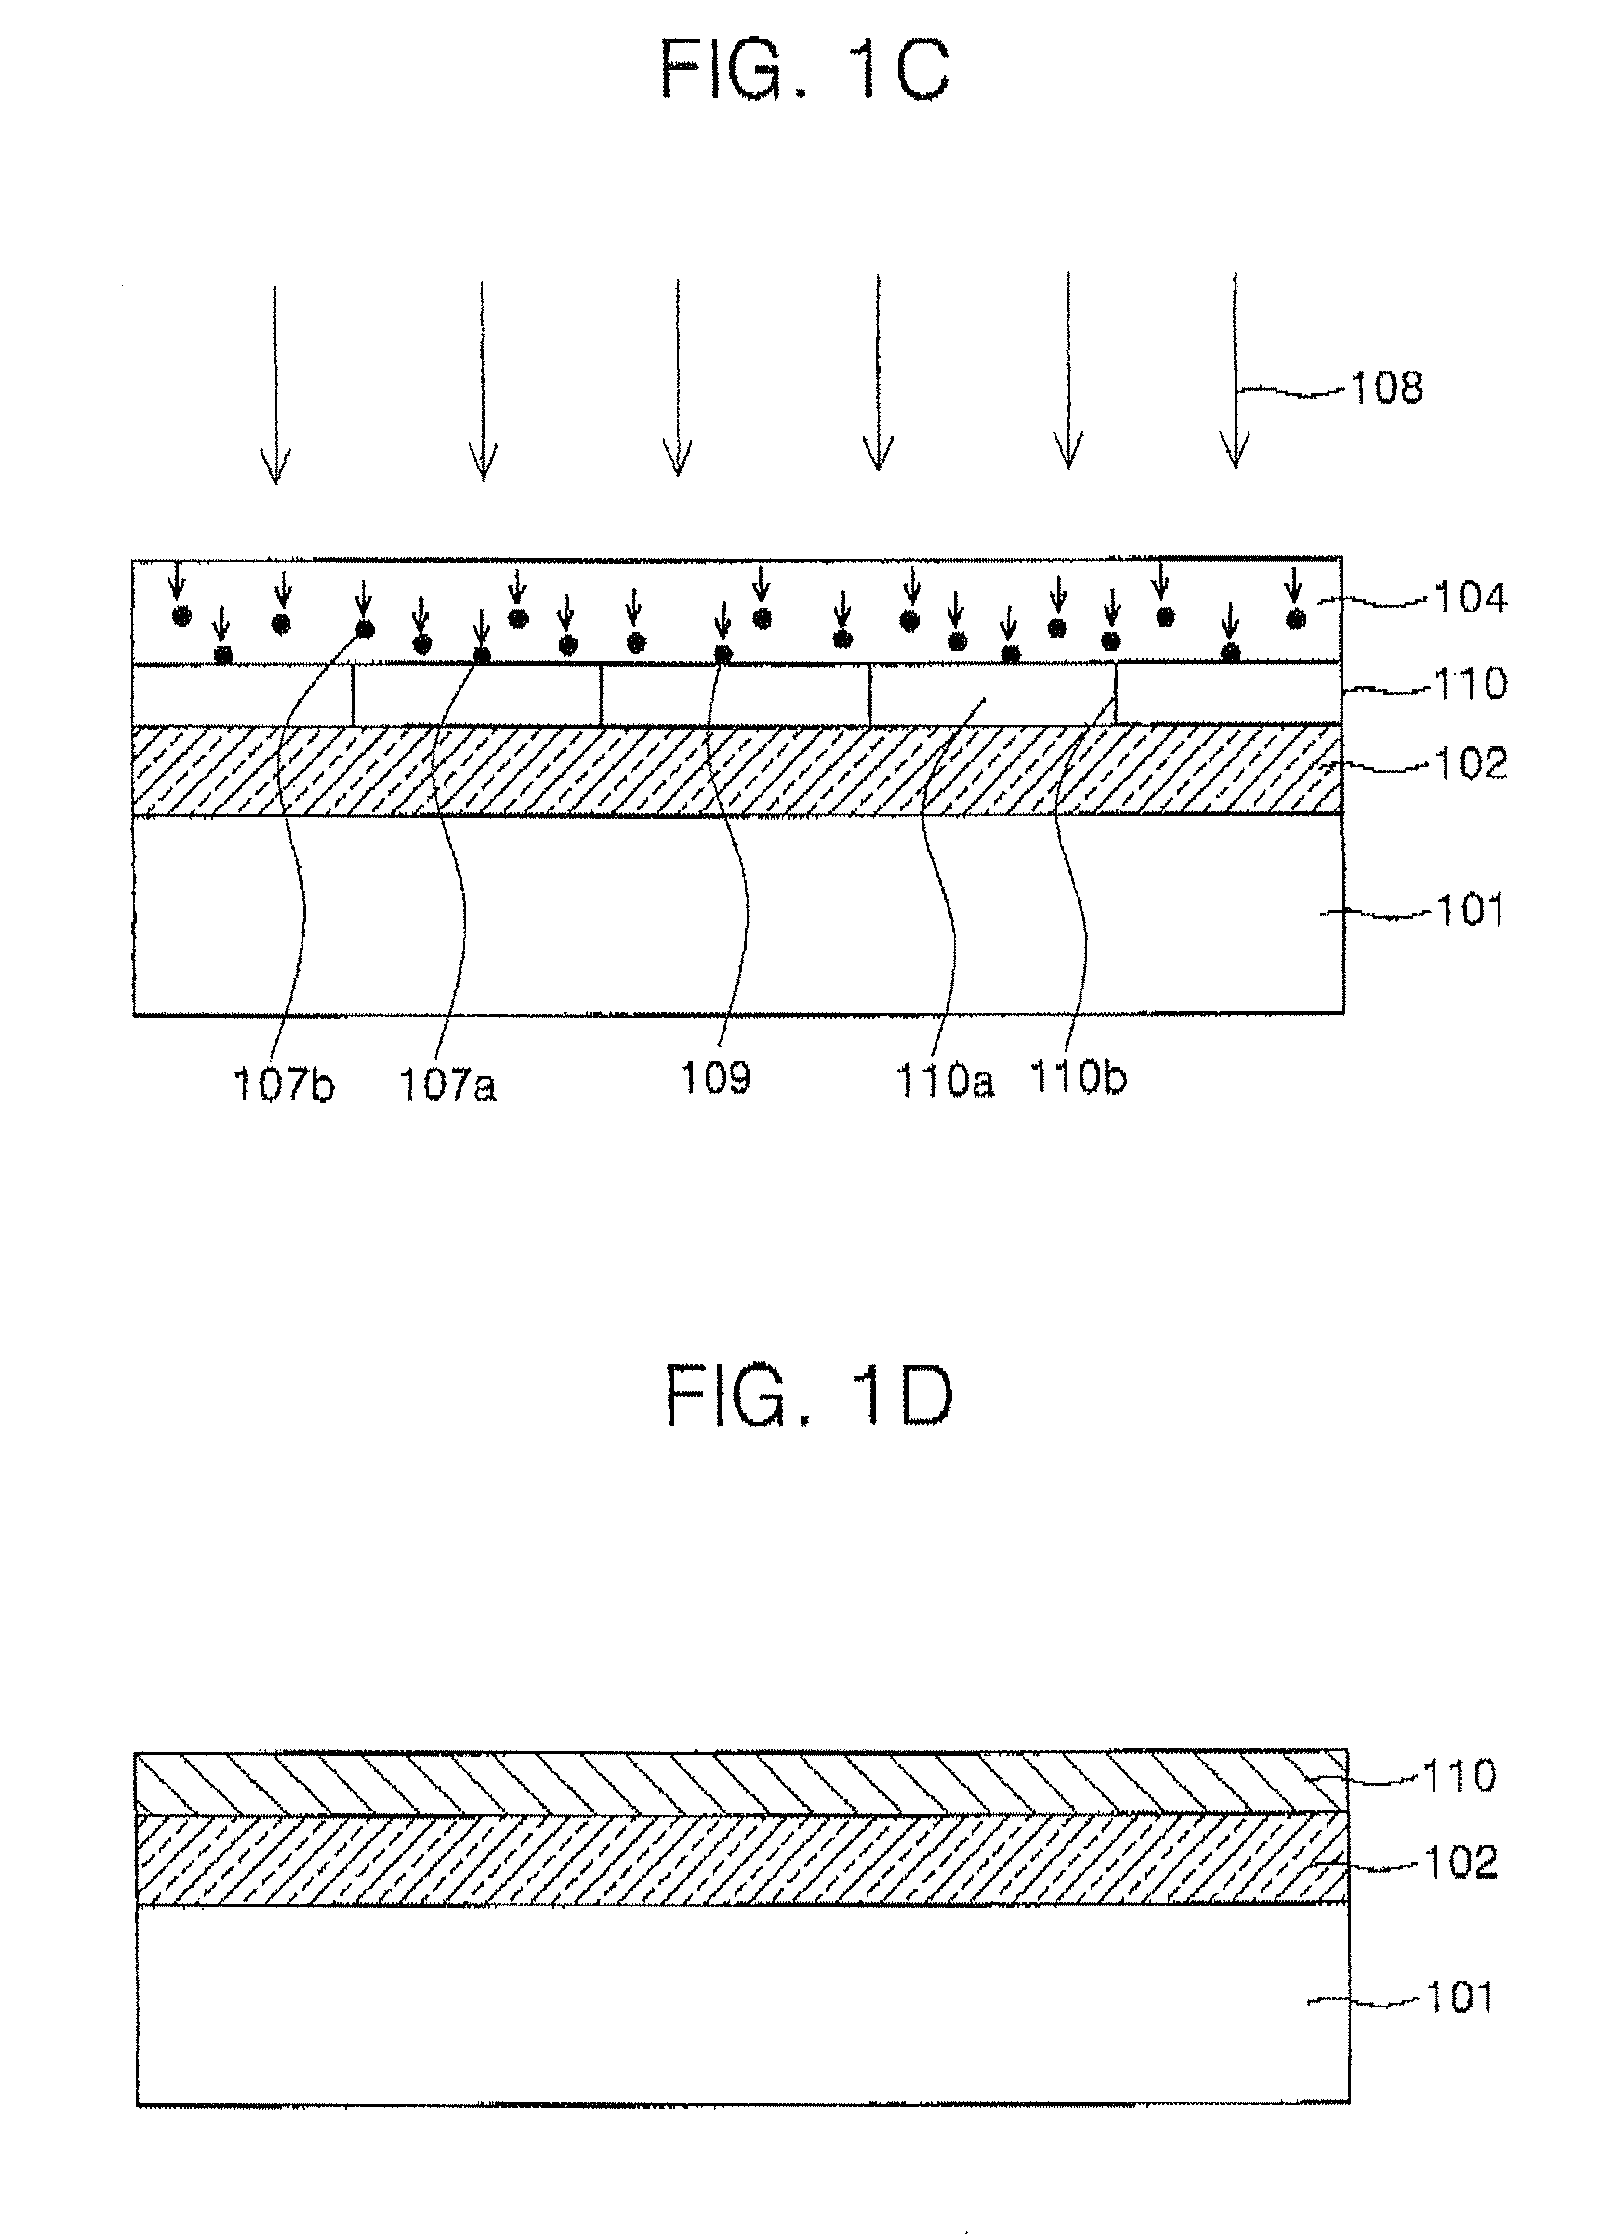 Method of fabricating thin film transistor